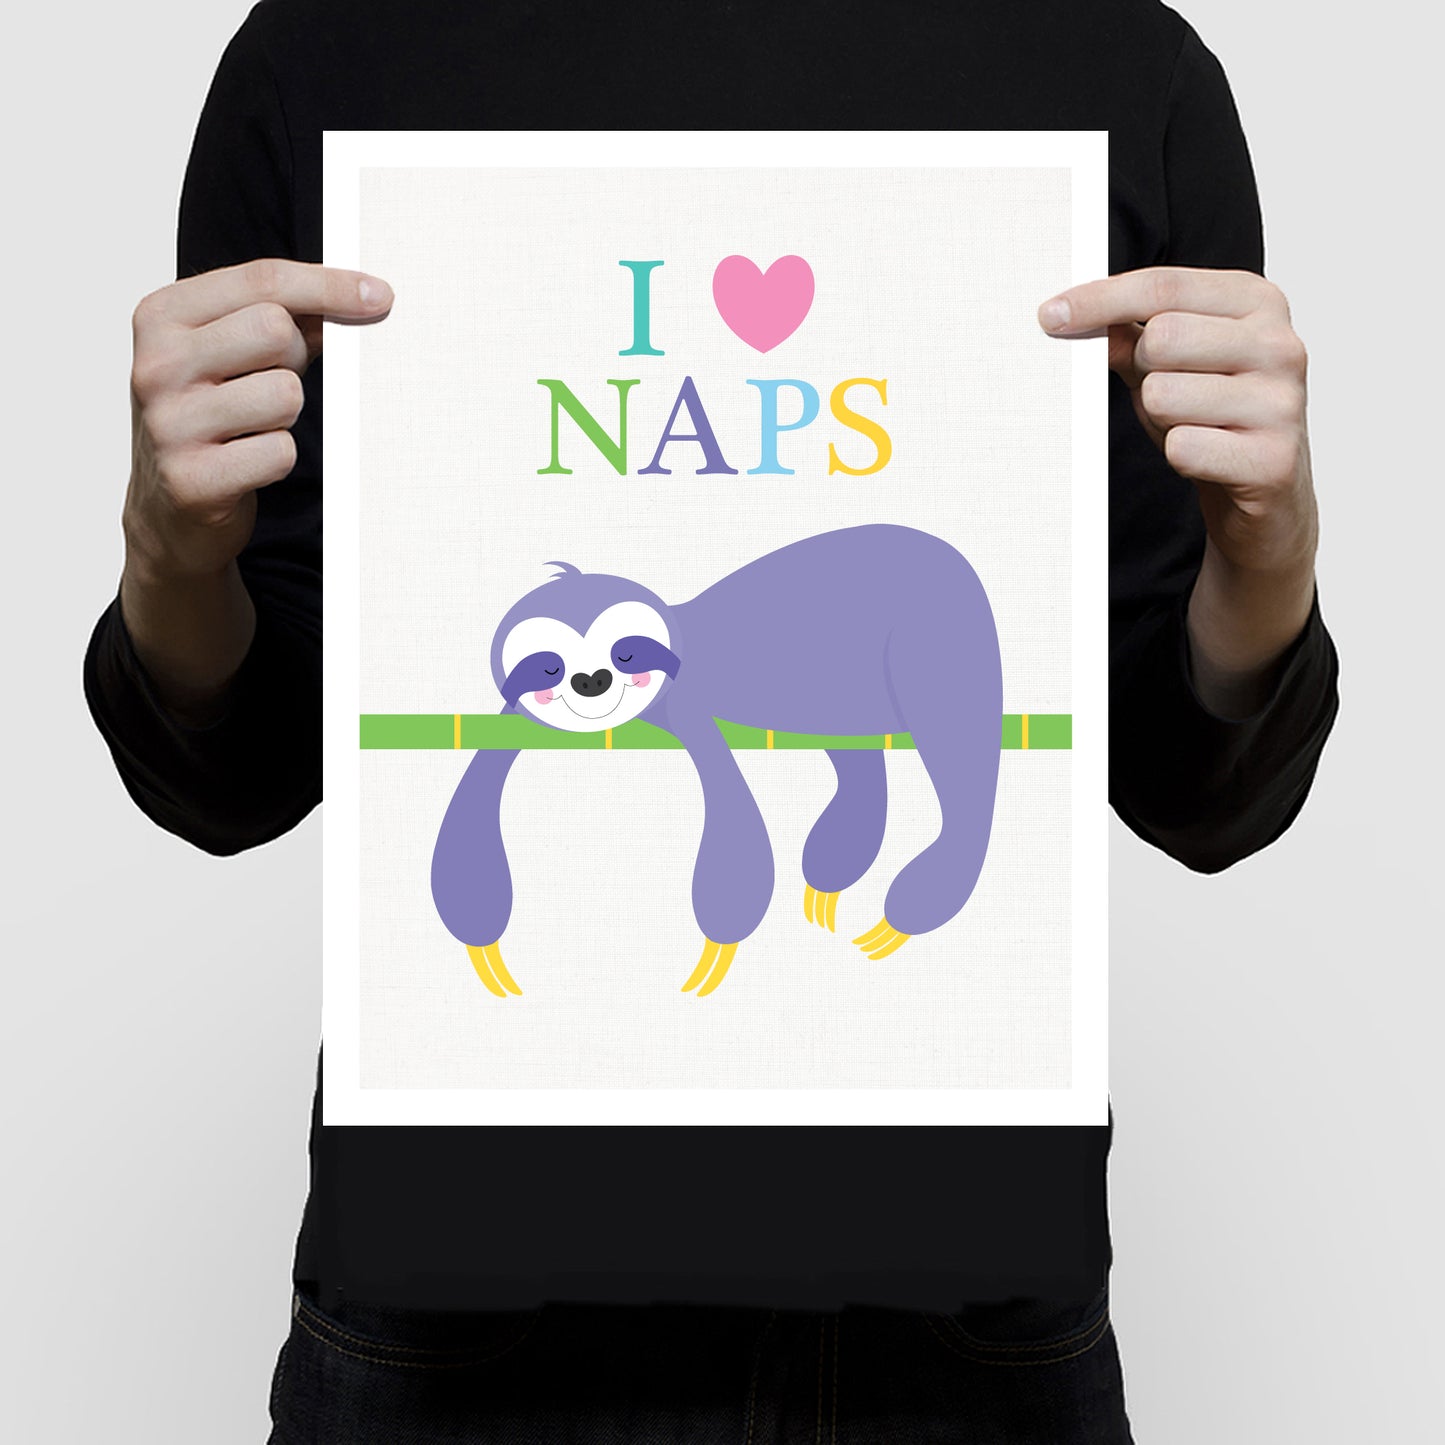 Sleeping sloth print